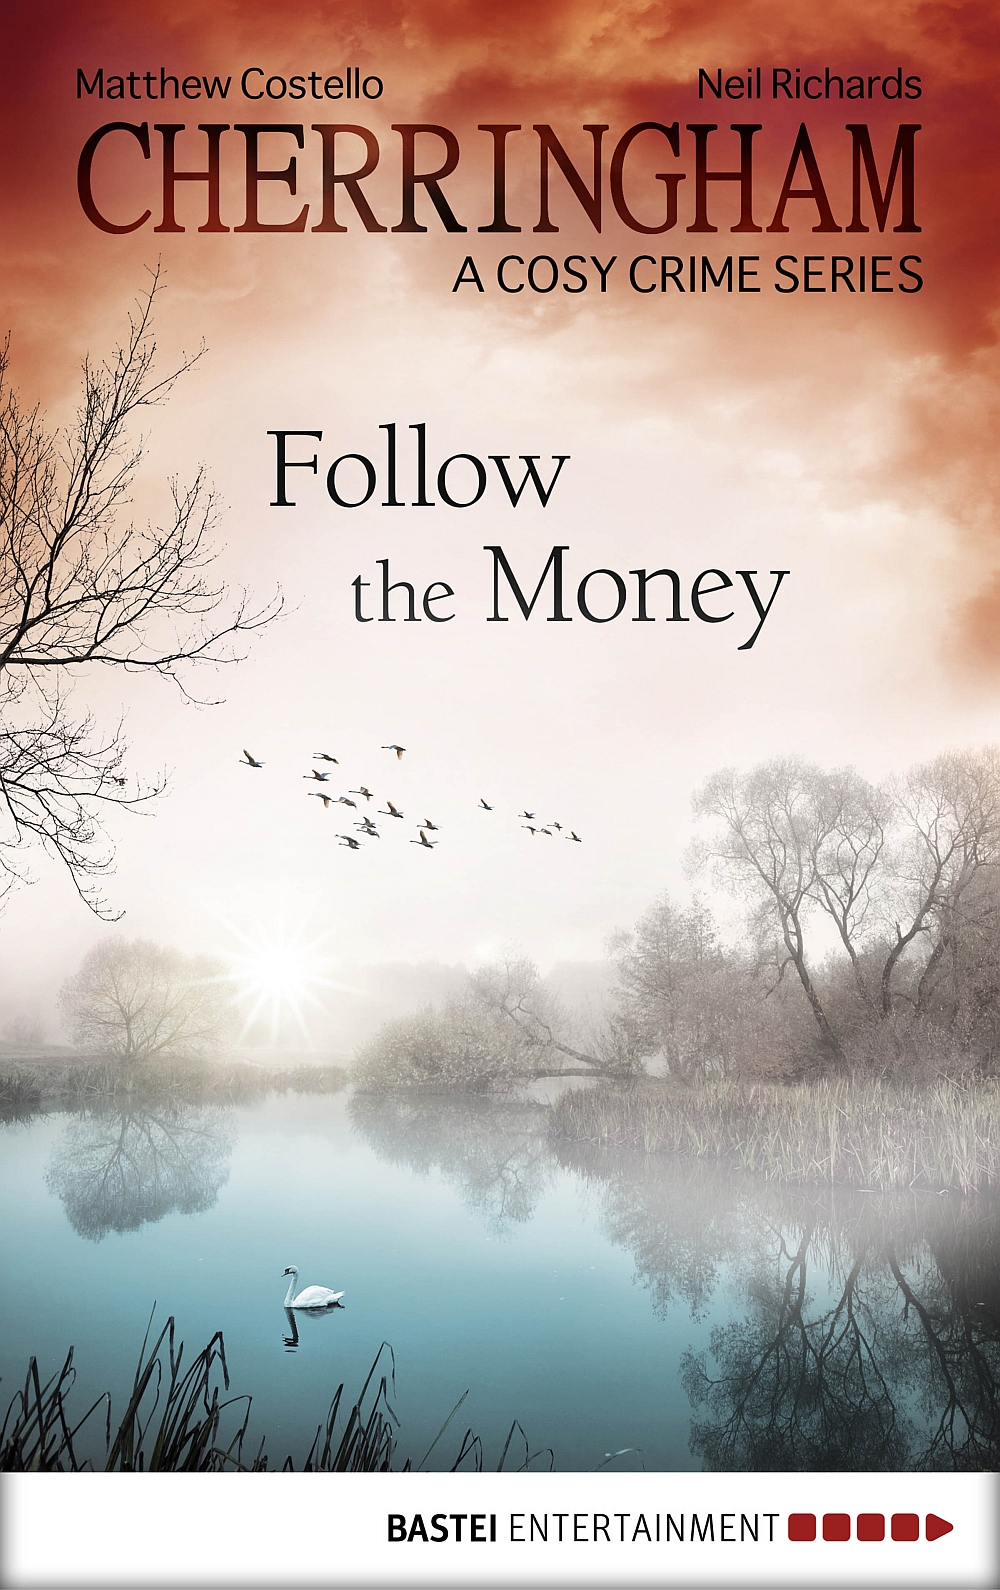 Cherringham--Follow the Money (2015) by Neil Richards